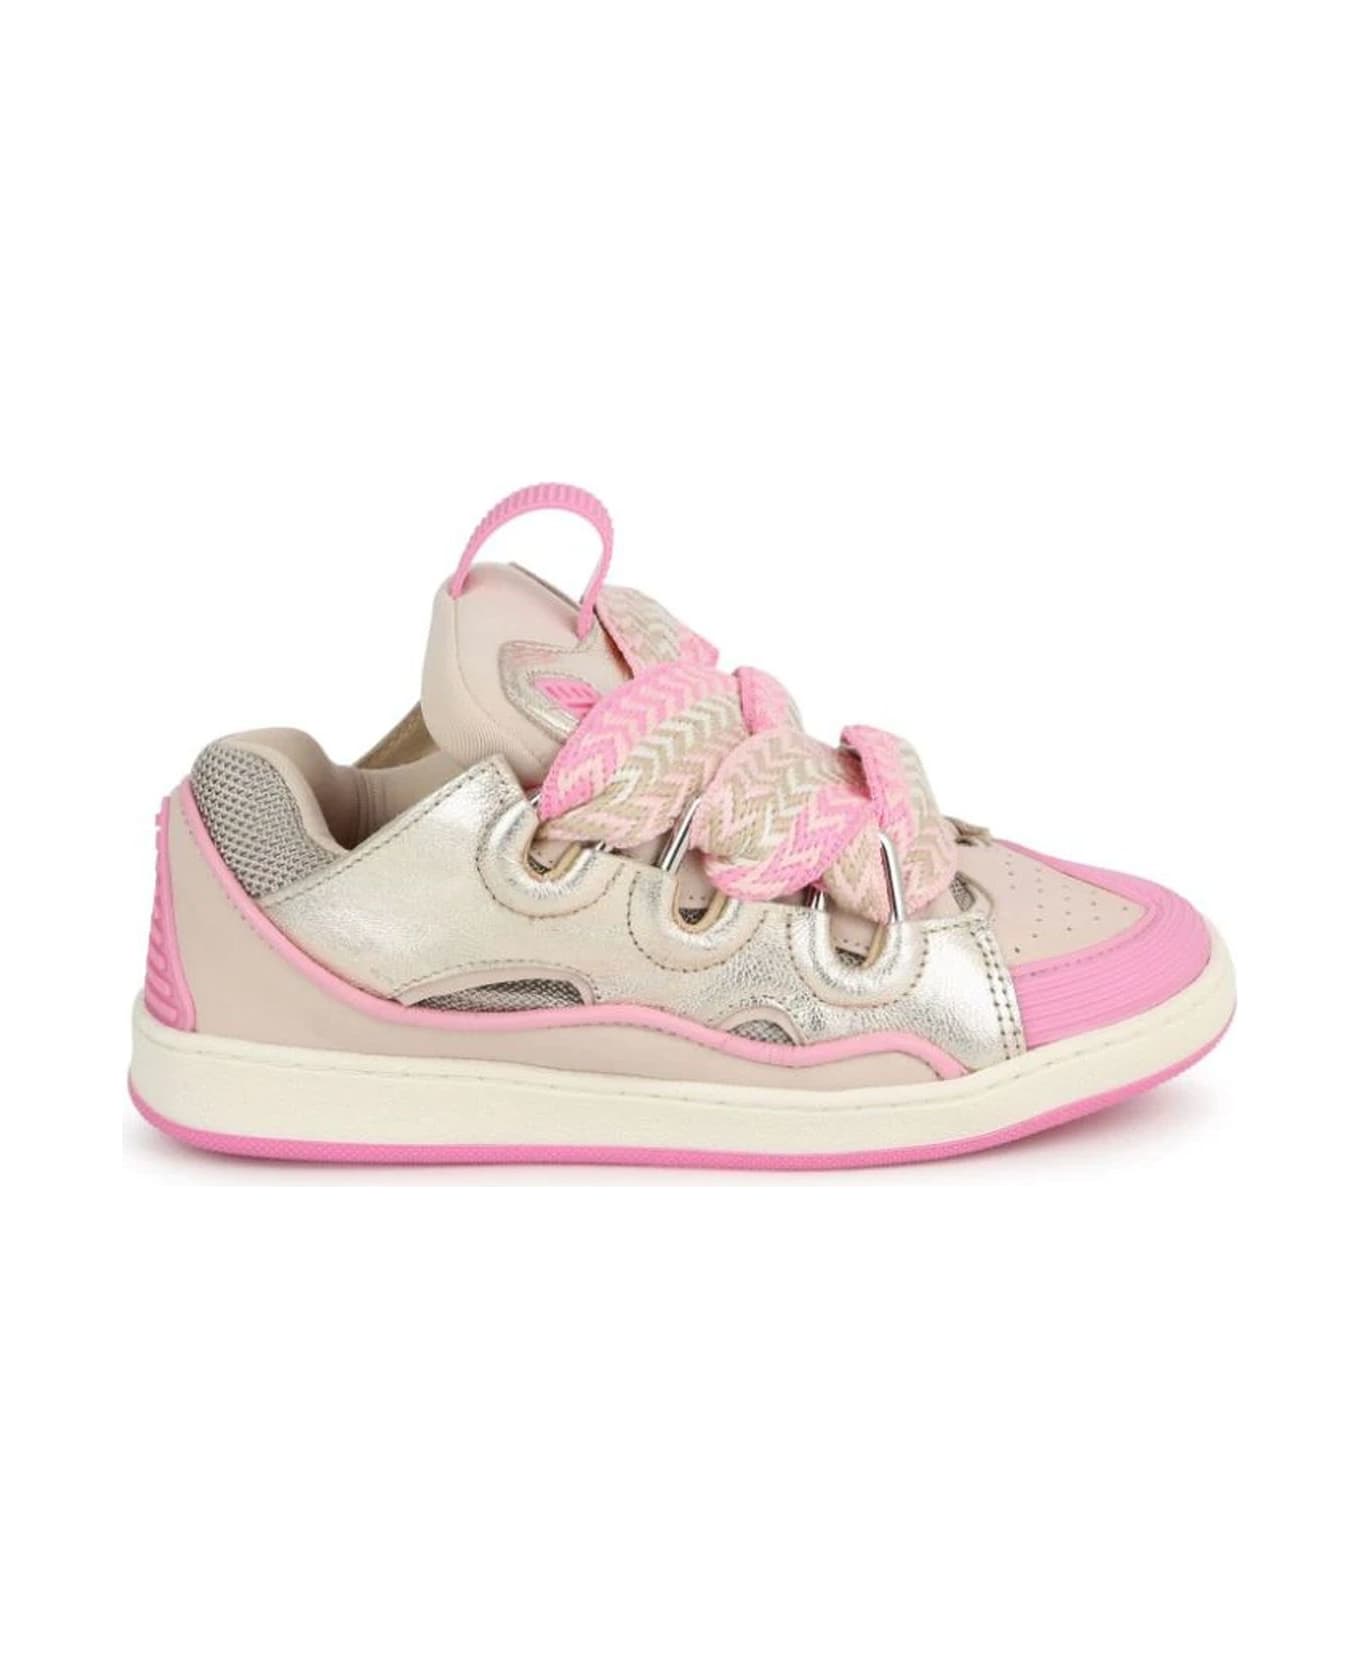 Lanvin Sneakers Pink - Pink